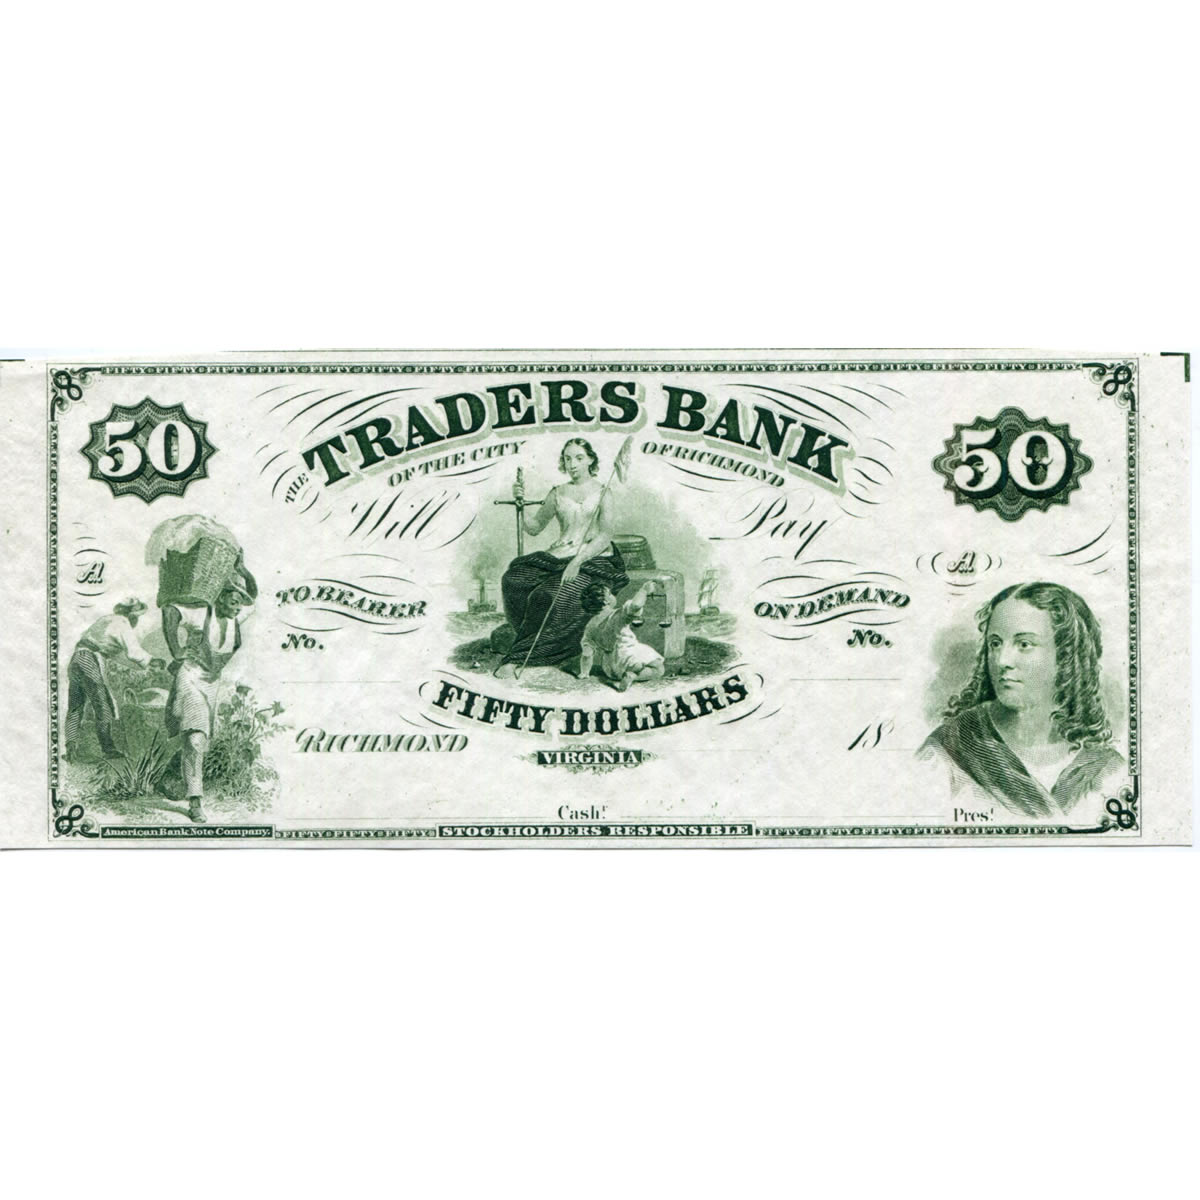 Virginia Richmond 18xx $50 Traders Bank VA-195 G8 PF reprint